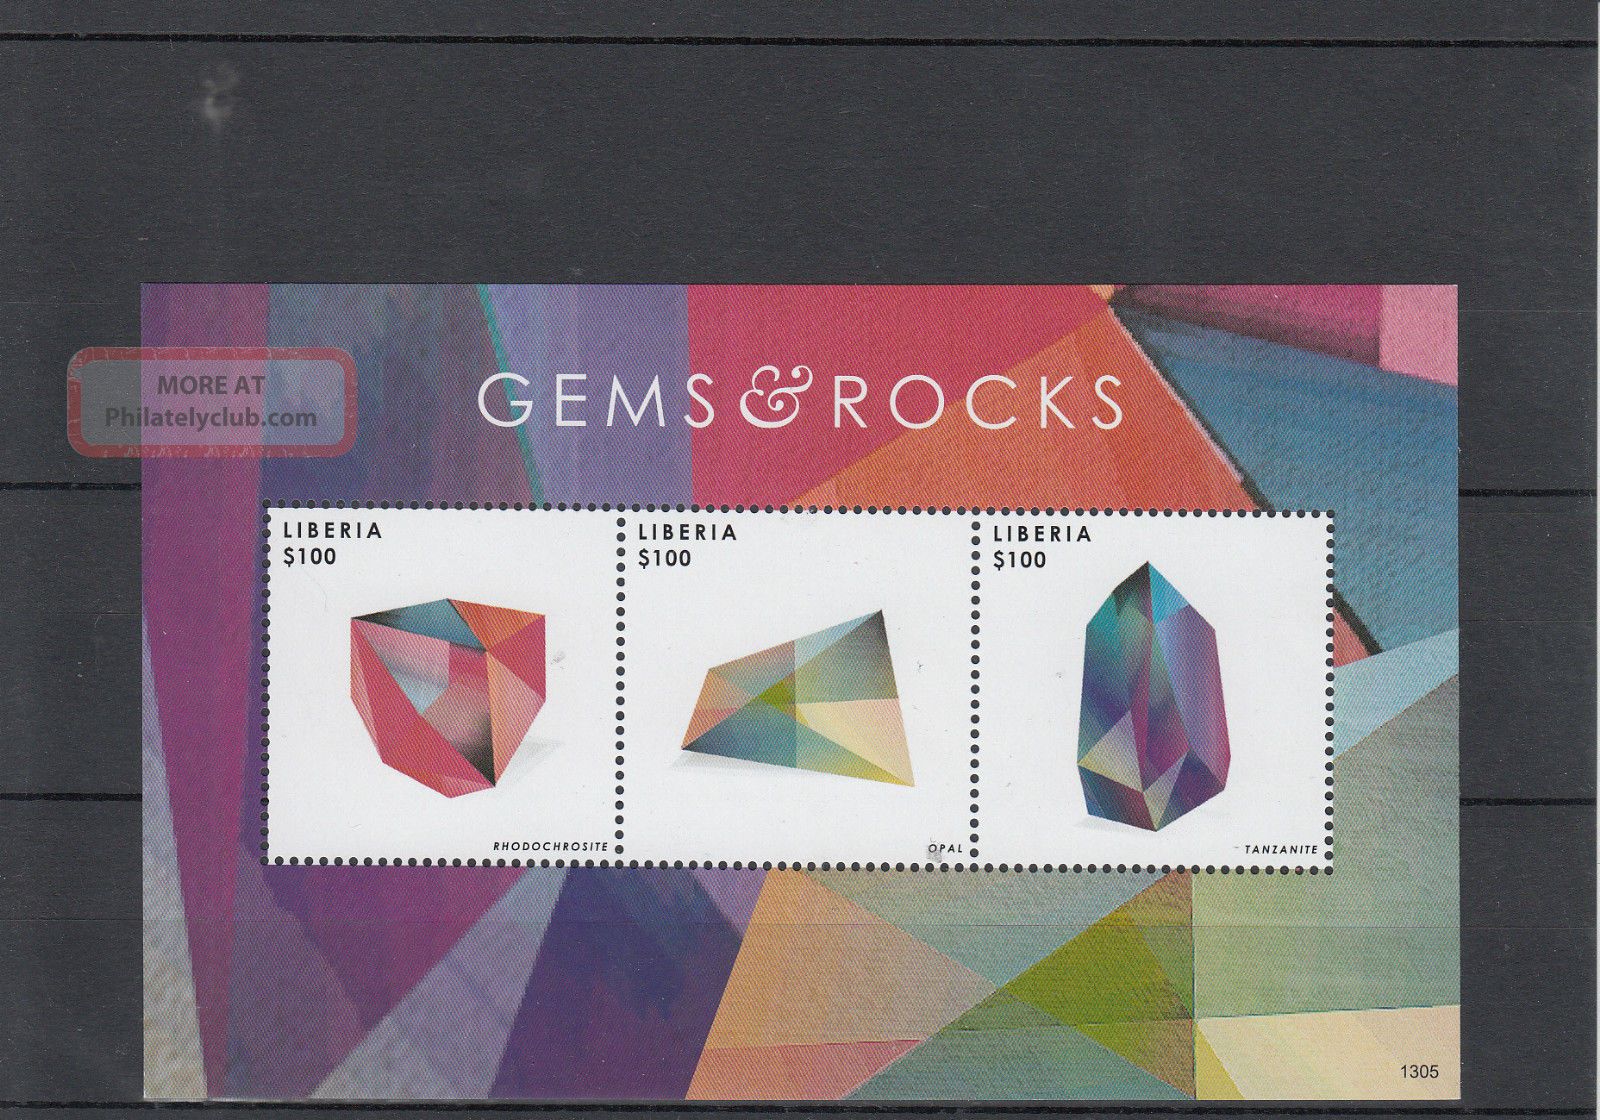 Liberia 2013 Gems & Rocks Ii 3v M/s Rhodochrosite Opal Tanzanite Gemology Topical Stamps photo